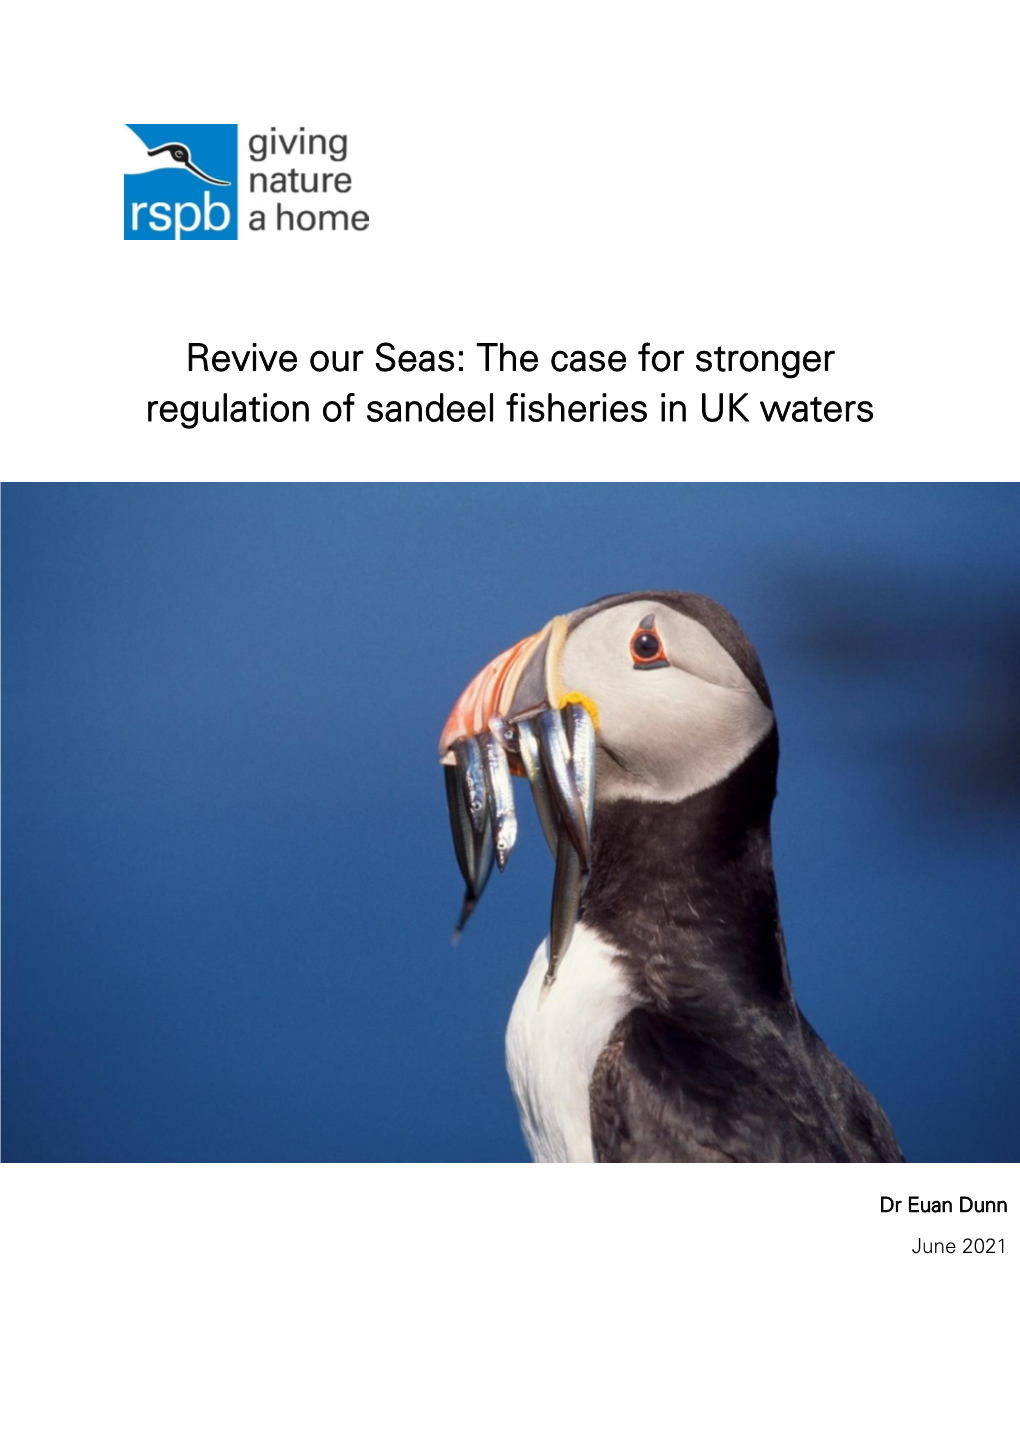 The Case for Stronger Regulation of Sandeel Fisheries in UK Waters